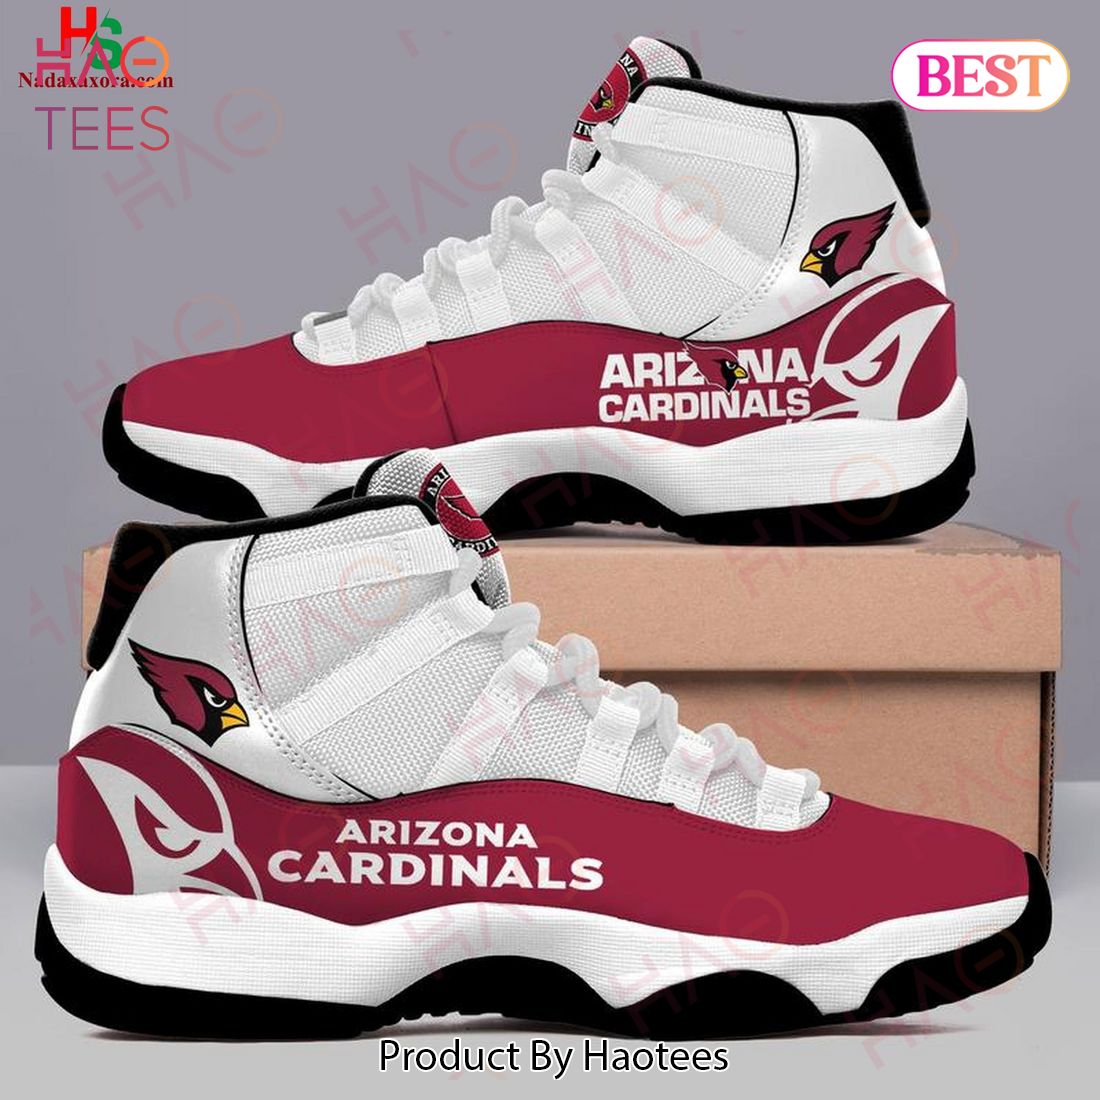 NFL Arizona Cardinals Football Team Air Jordan 11 Sneakers Shoes